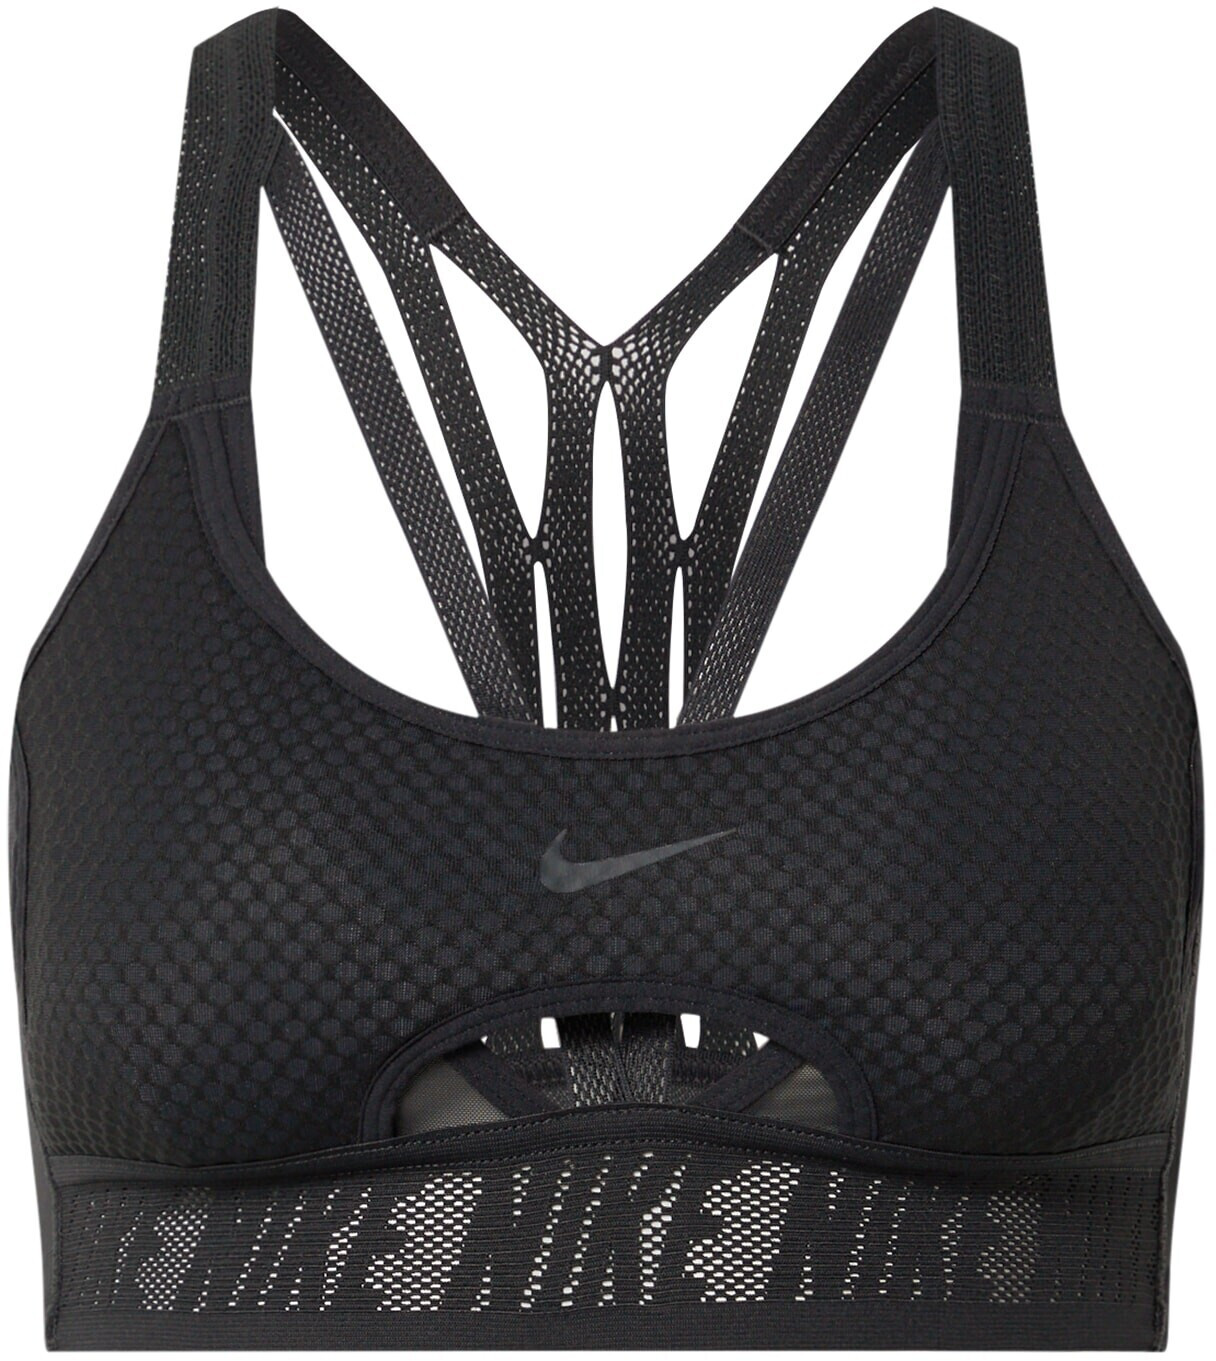 Nike Training Indy Ultrabreathe light support sports bra in black